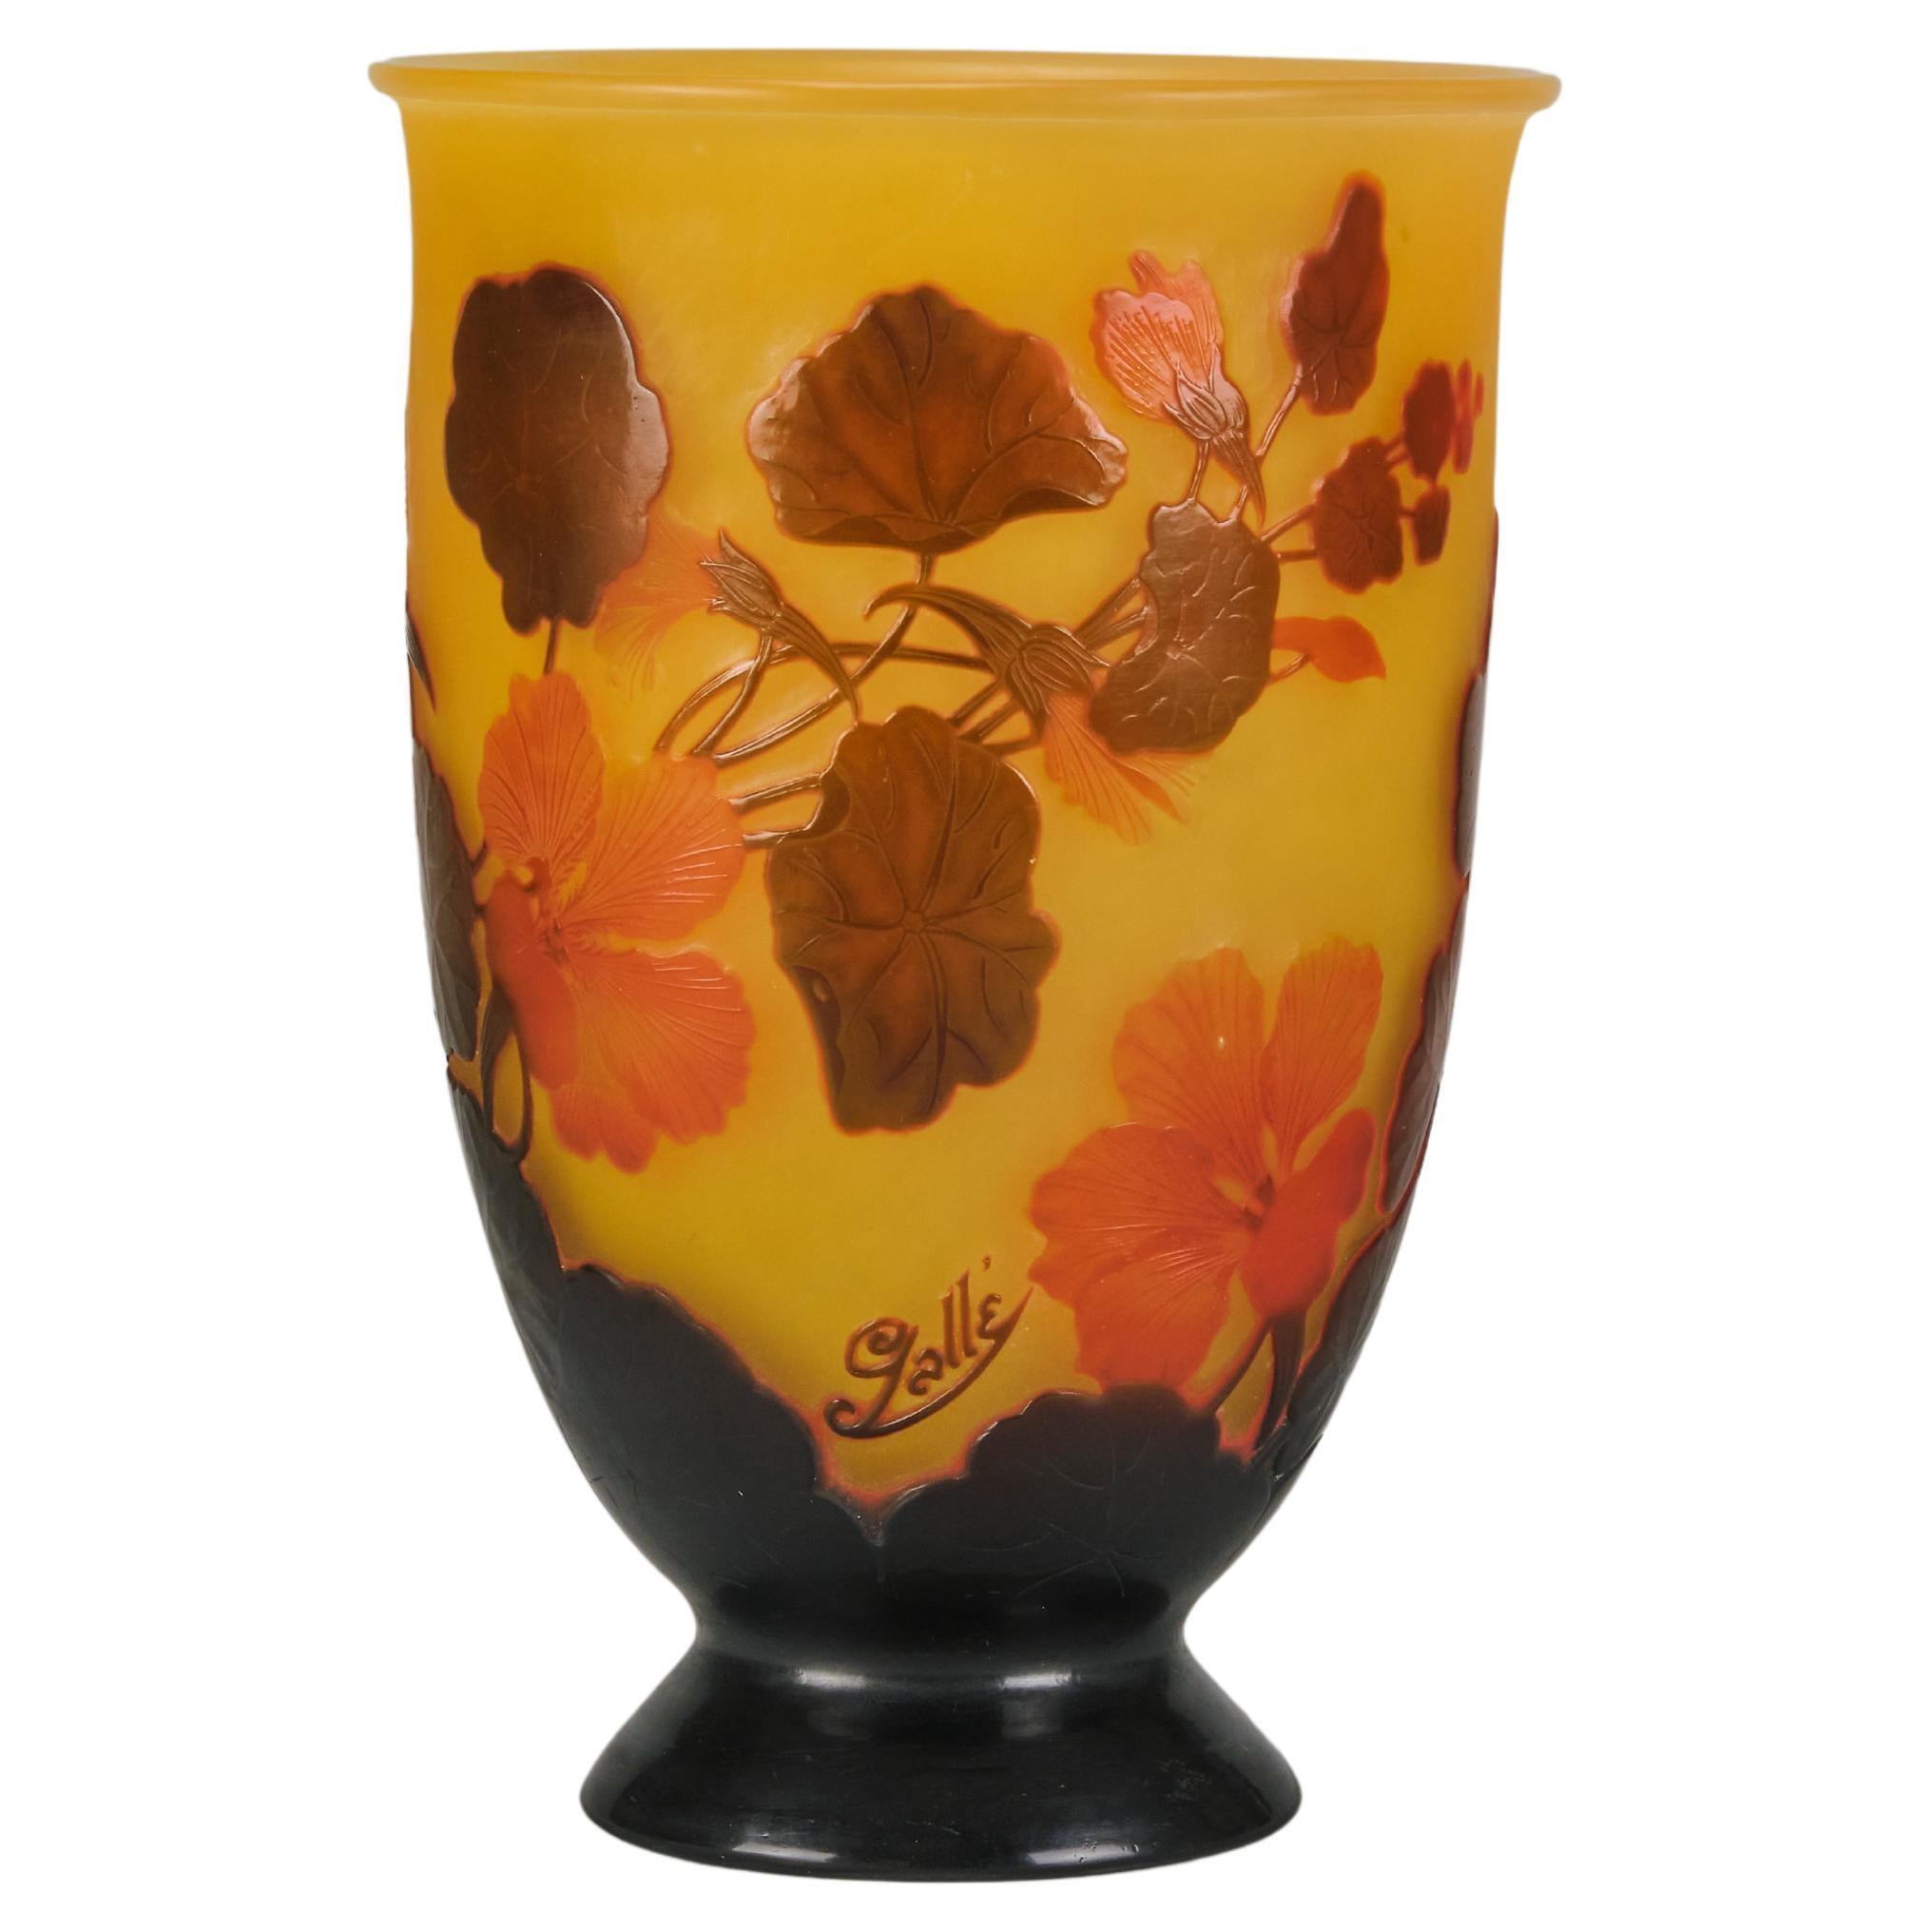 Early 20th Century Cameo Glass Vase Entitled "Nasturtium Vase" by Emile Gallé